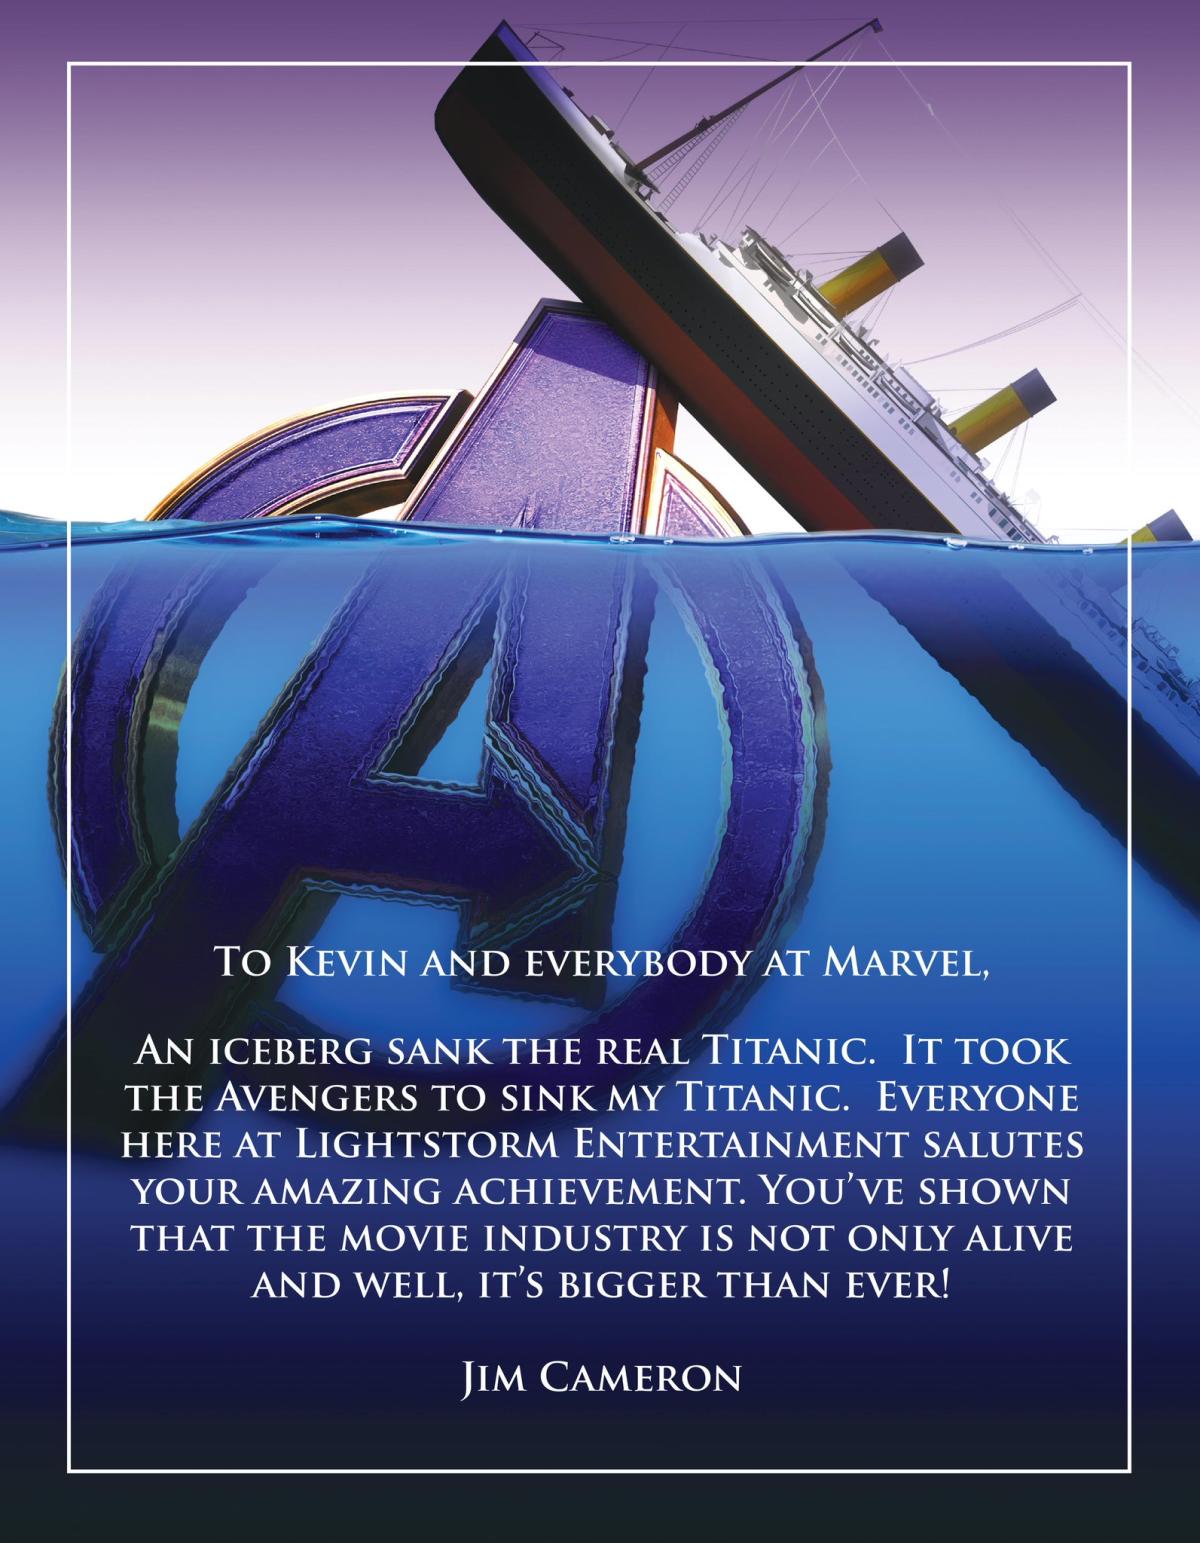 James Cameron congratulates Marvel for 'Avengers: Endgame' success